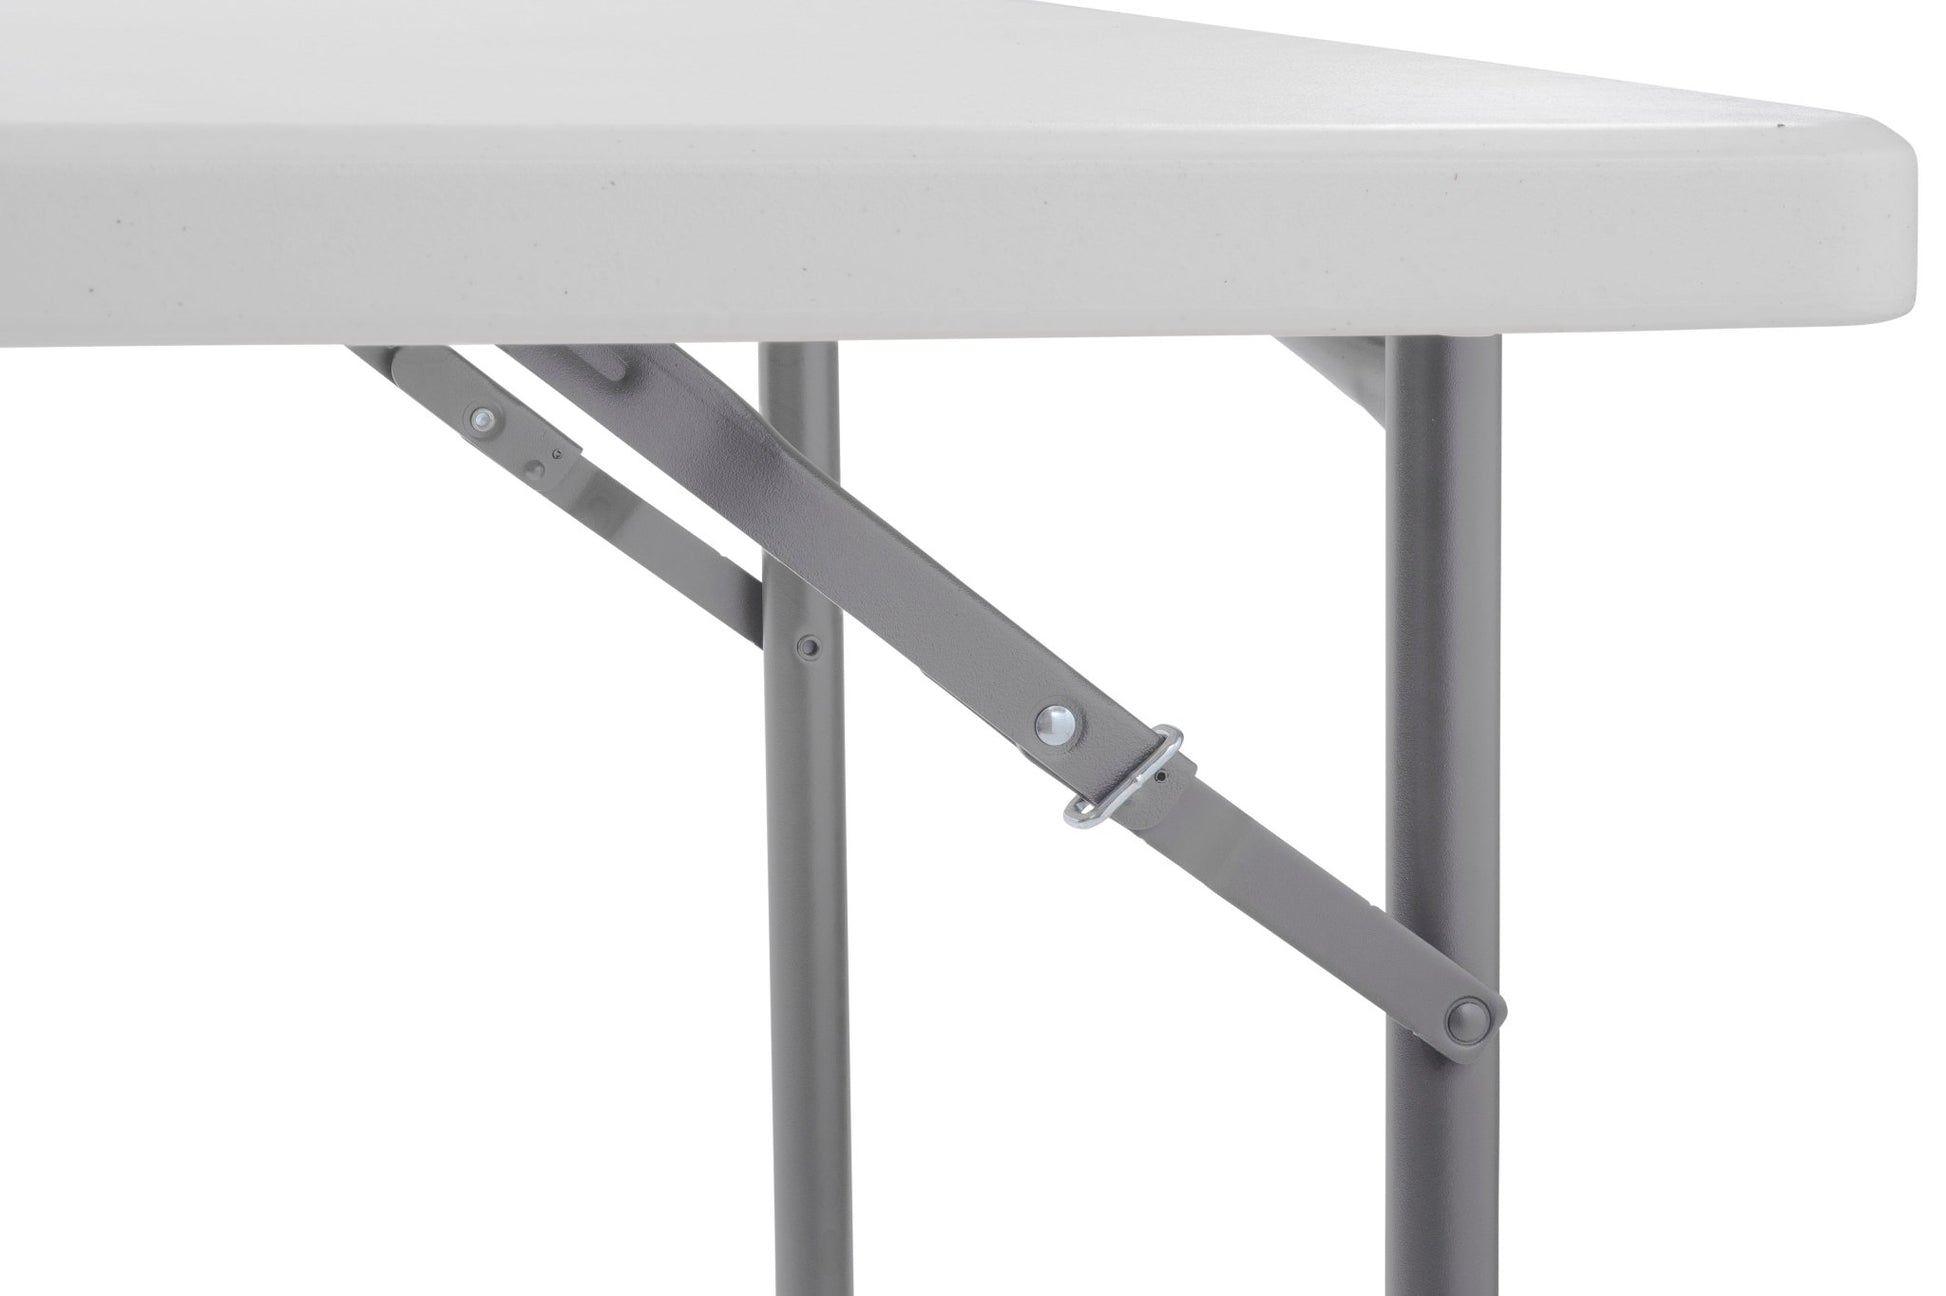 NPS 36" x 36" Heavy Duty Folding Table, Speckled Grey (National Public Seating NPS-BT3636) - SchoolOutlet